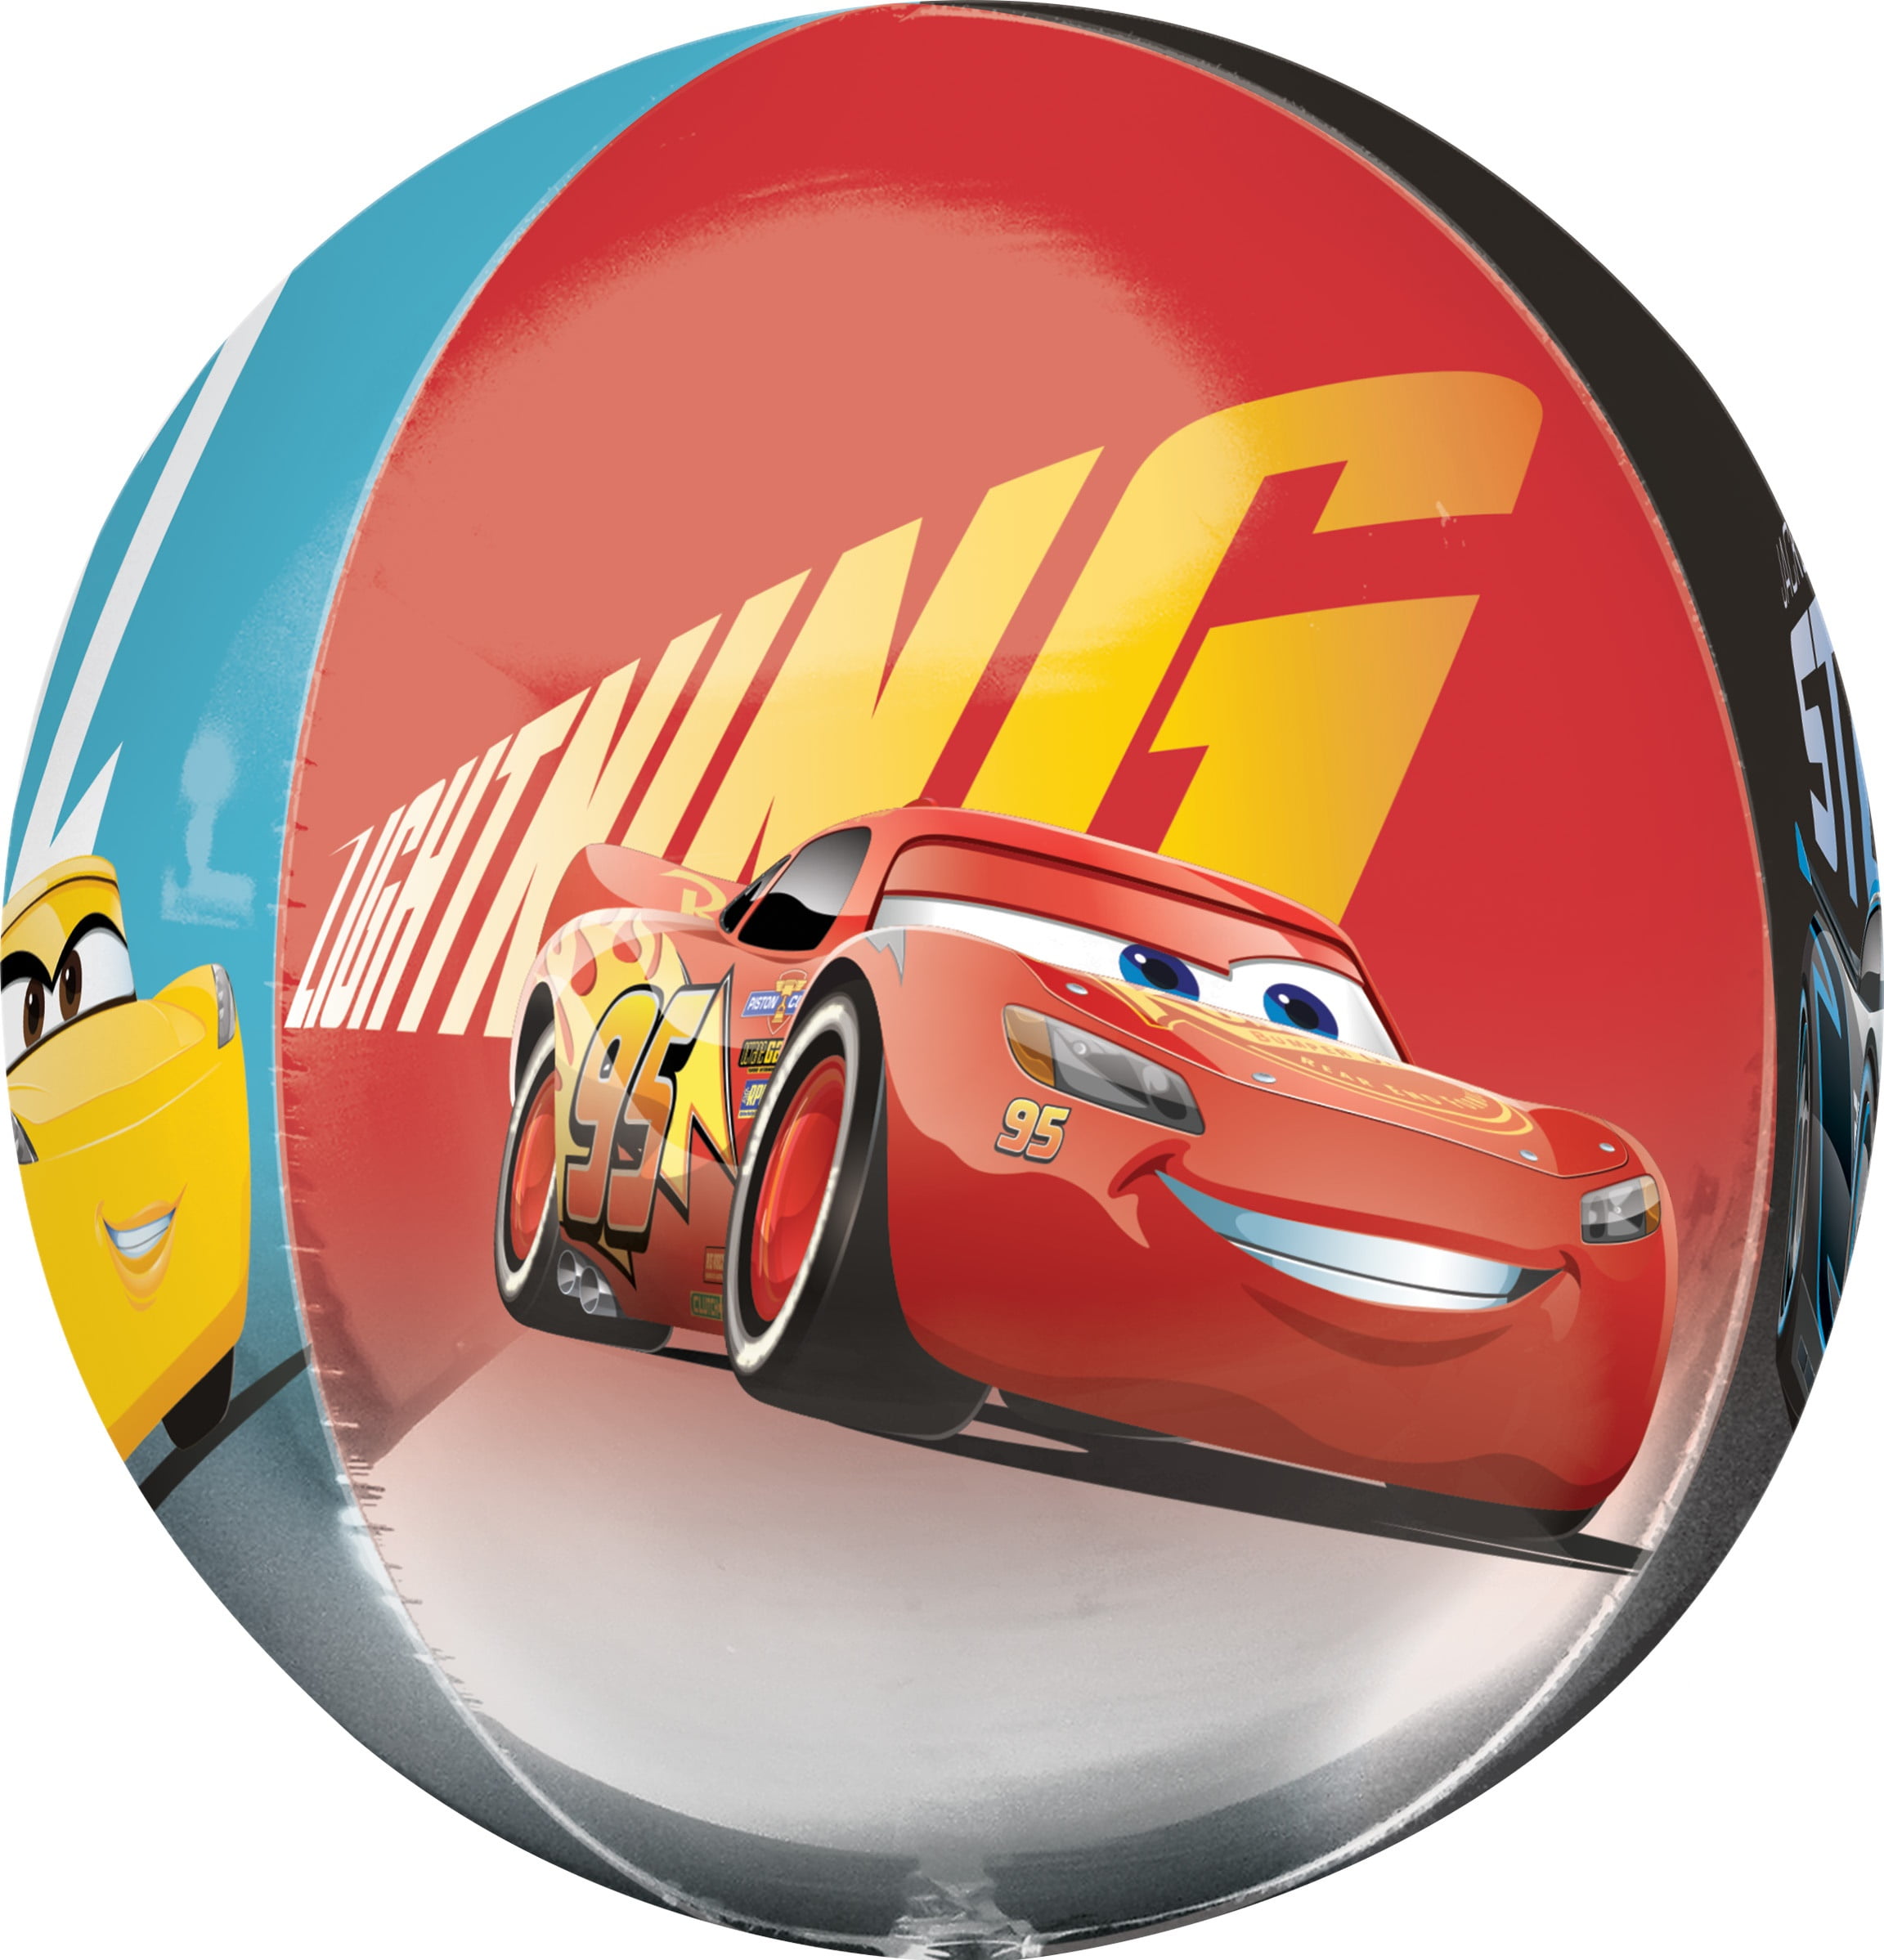 Bougie Disney Pixar Cars 8 cm - Dekora référence 346053